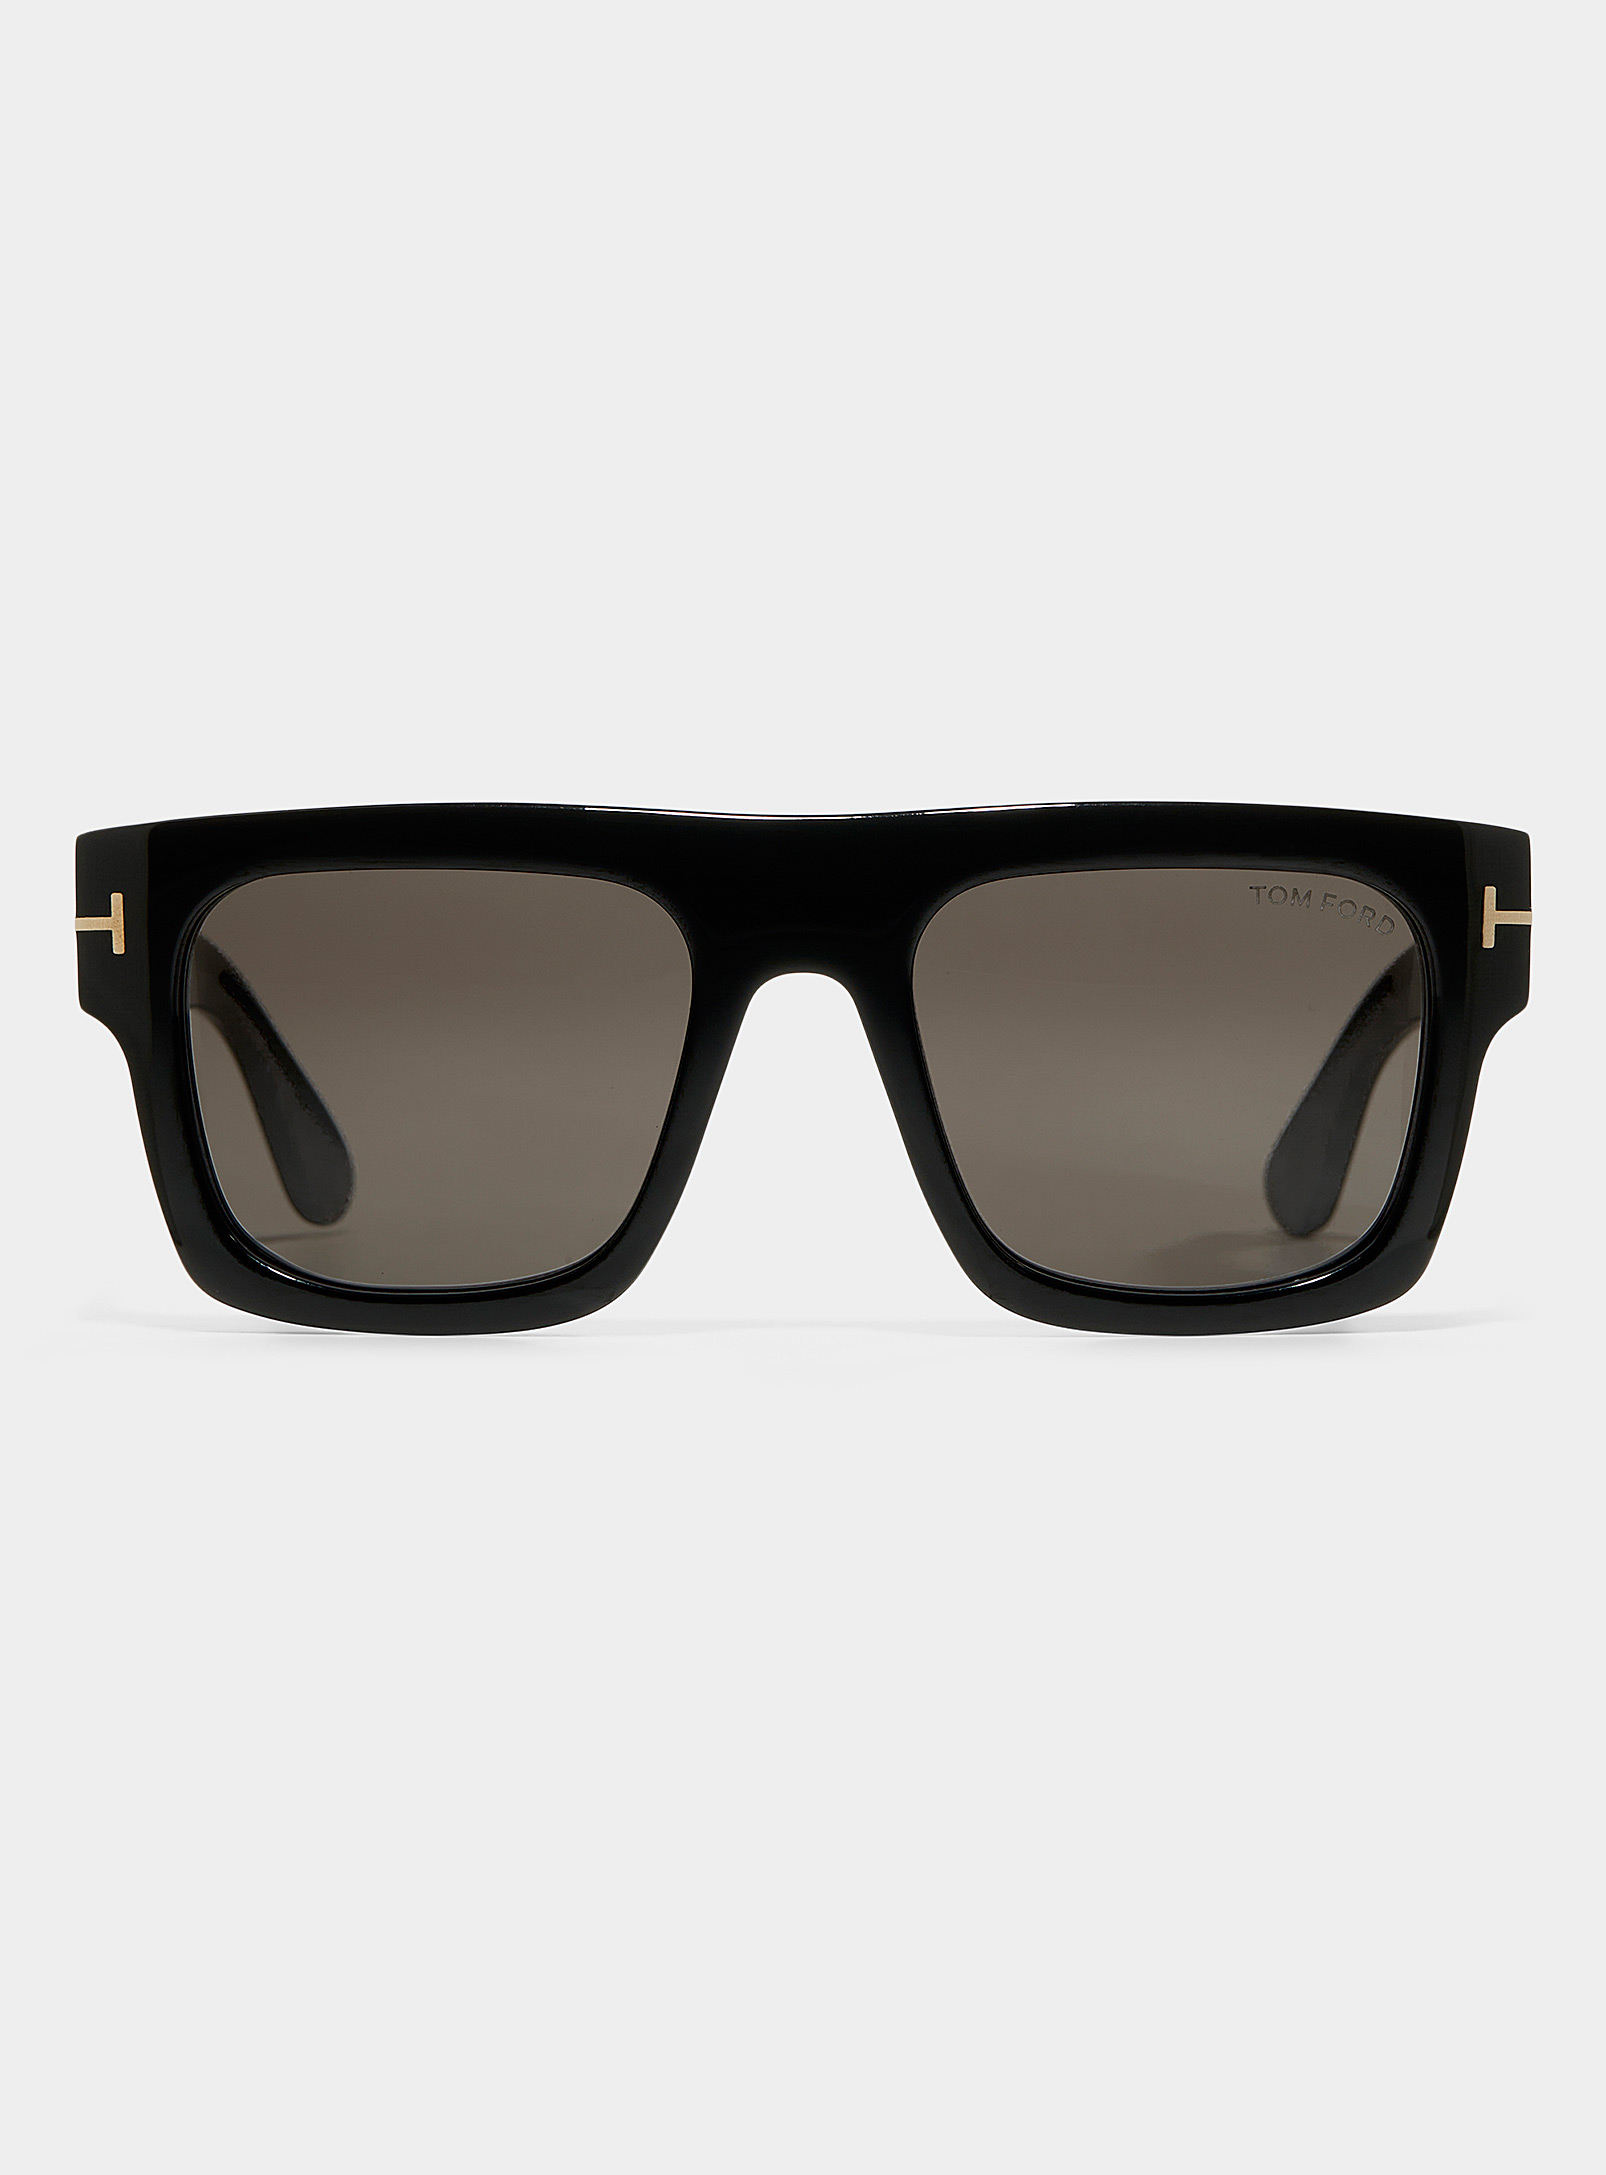 Tom Ford - Fausto square sunglasses